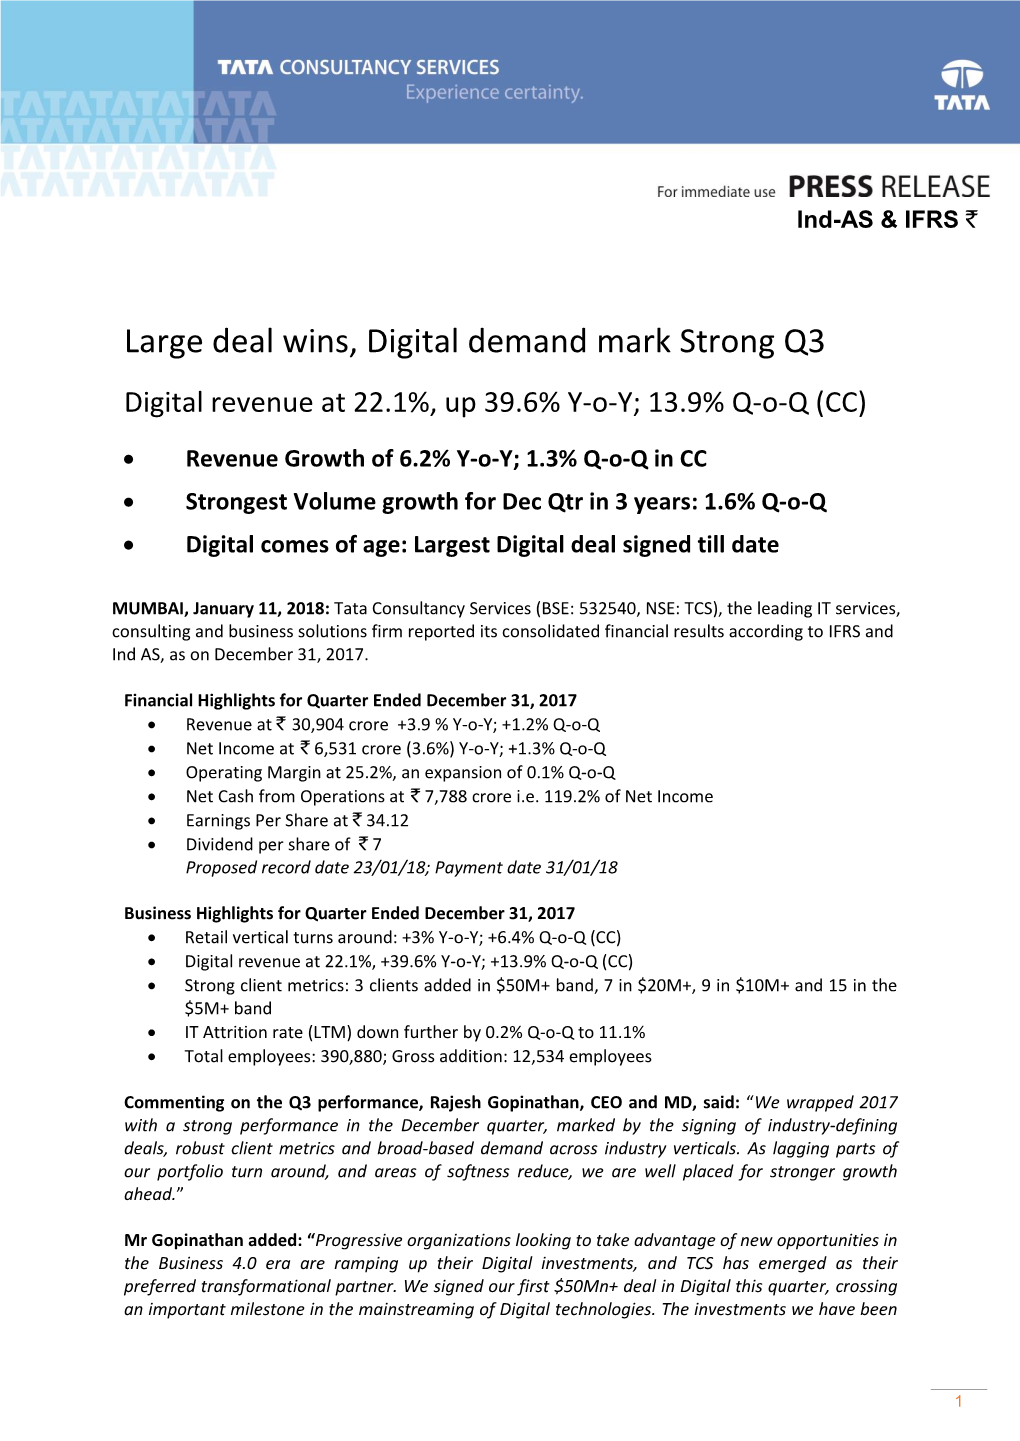 Large Deal Wins, Digital Demand Mark Strong Q3